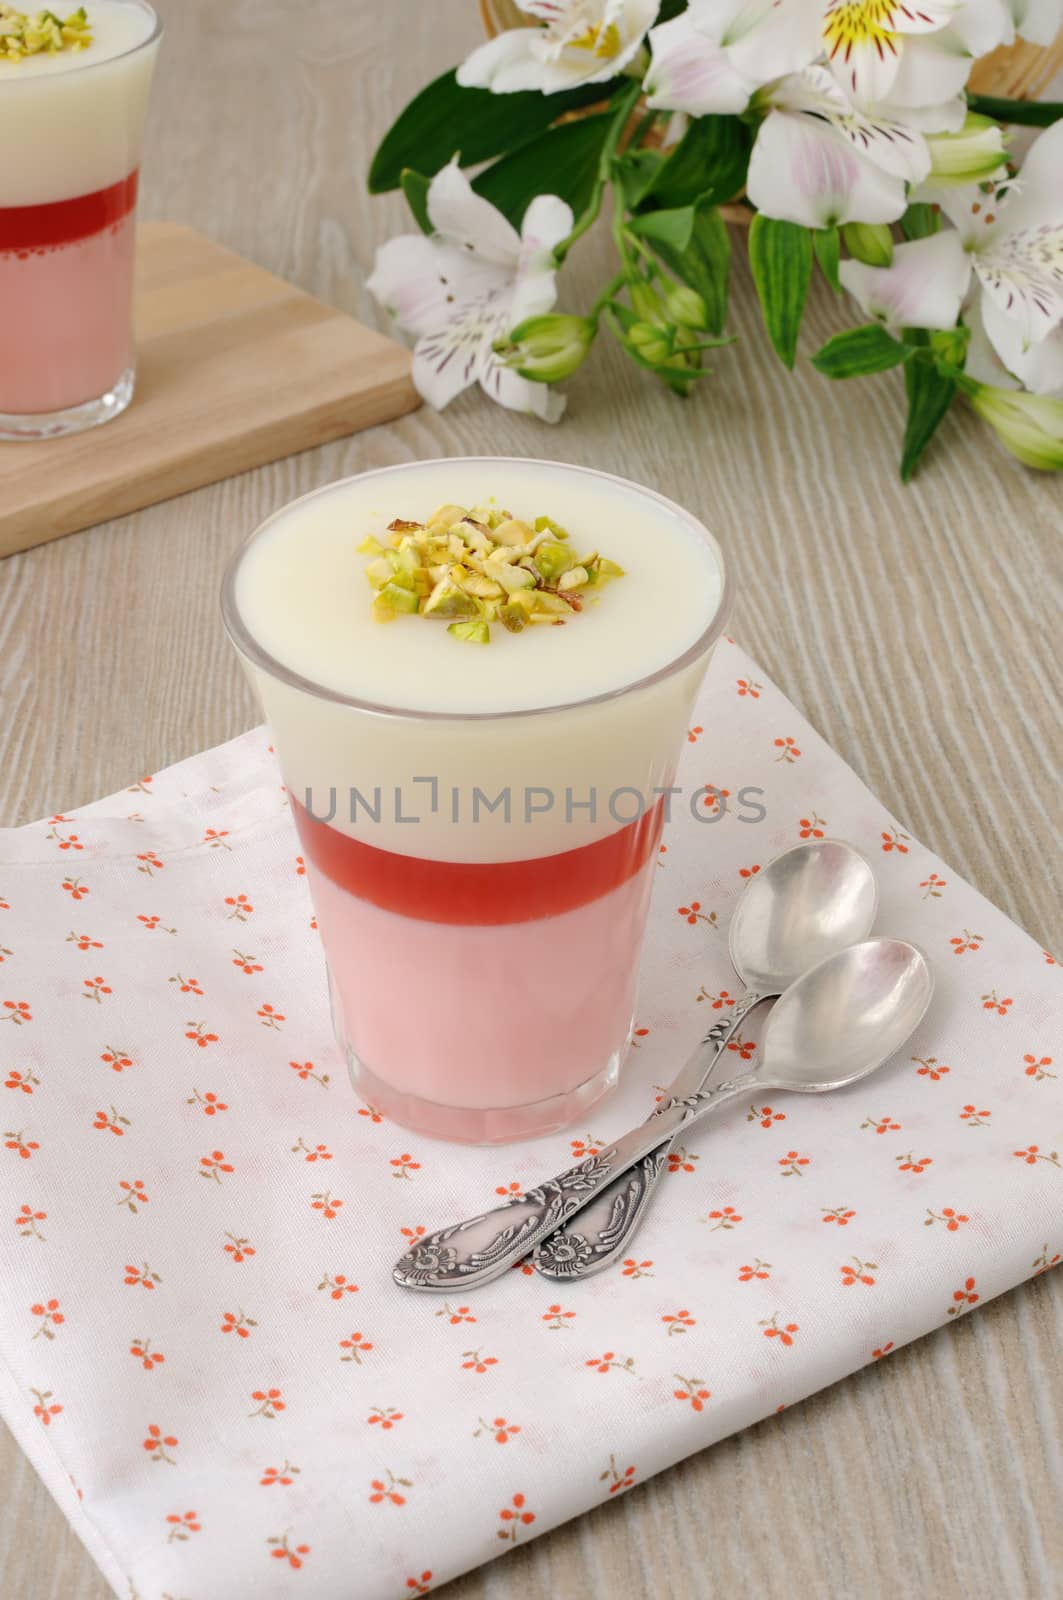 Light and refreshing strawberry yogurt dessert with pistachios